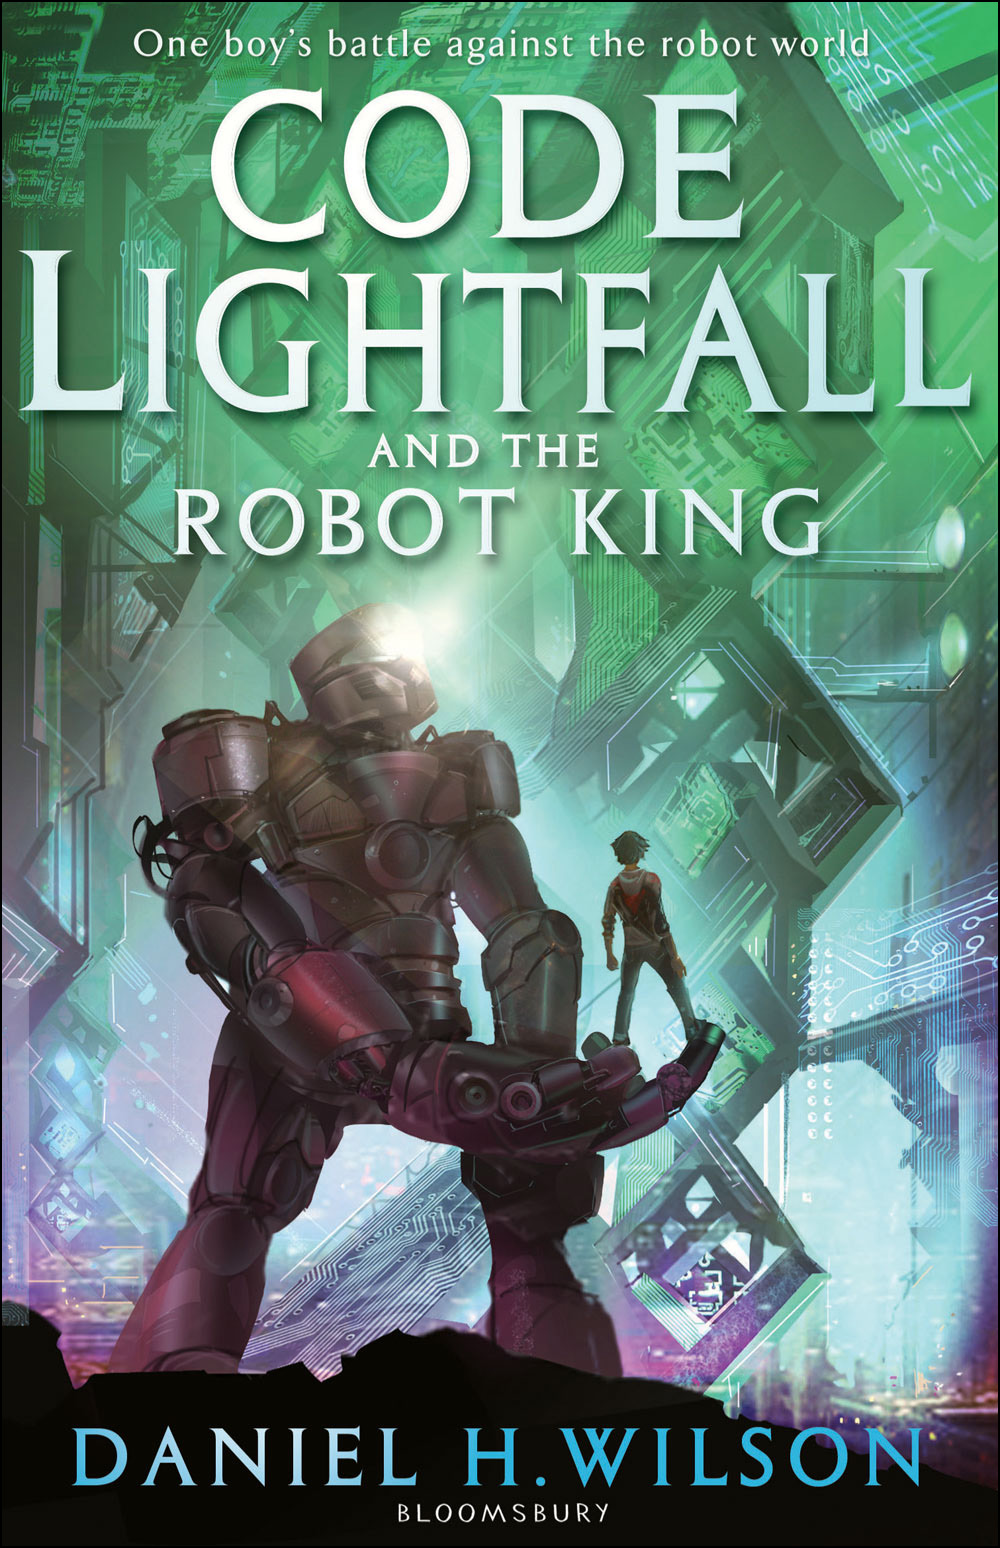 Code Lightfall and the Robot King (2010) by Daniel H. Wilson